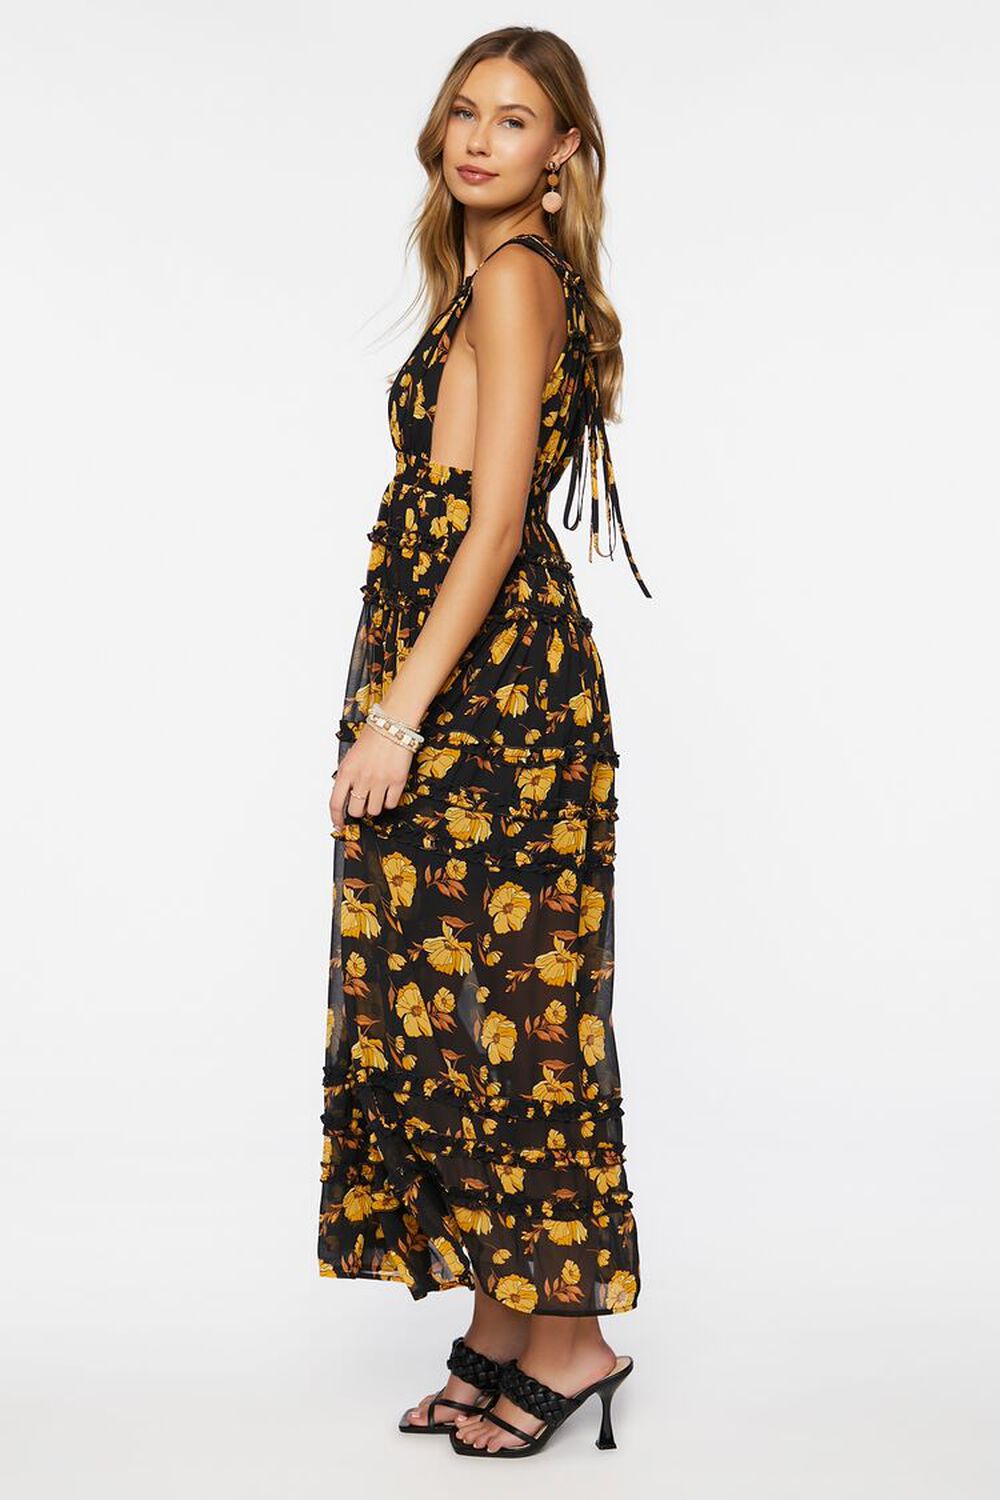 BLACK/MULTI Floral Print Plunging Maxi Dress, image 2